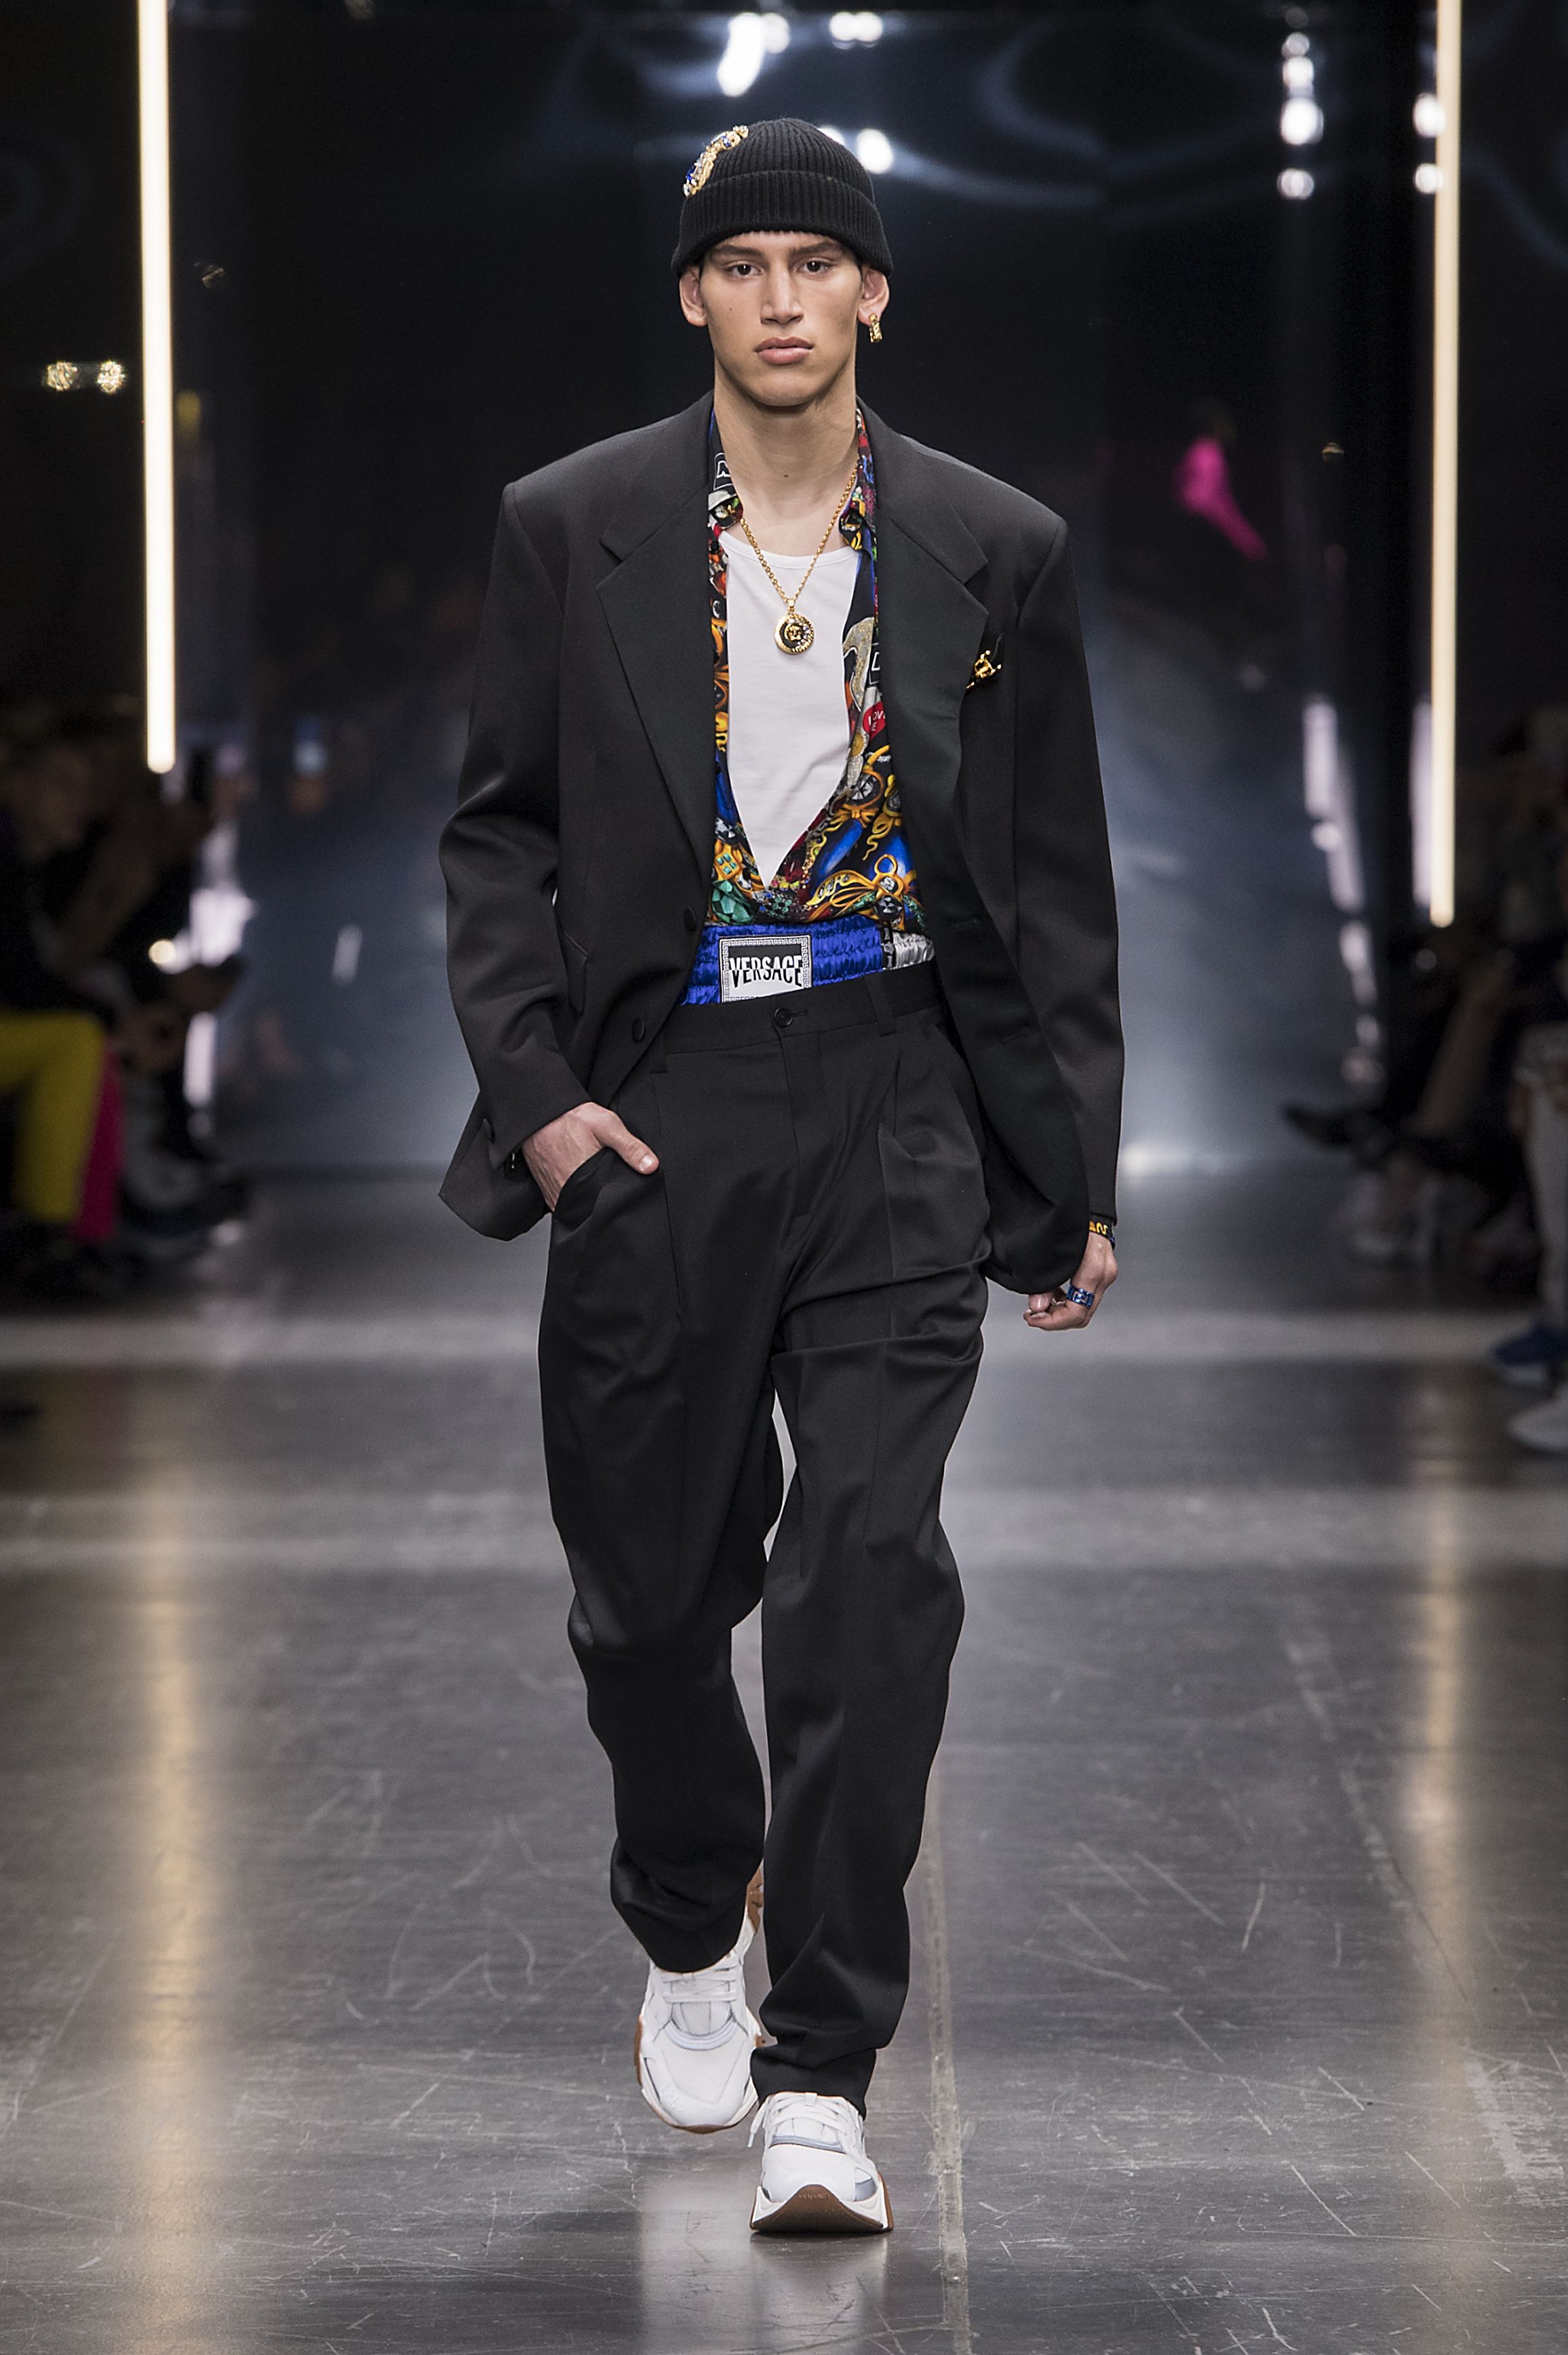 versace men's collection 2019